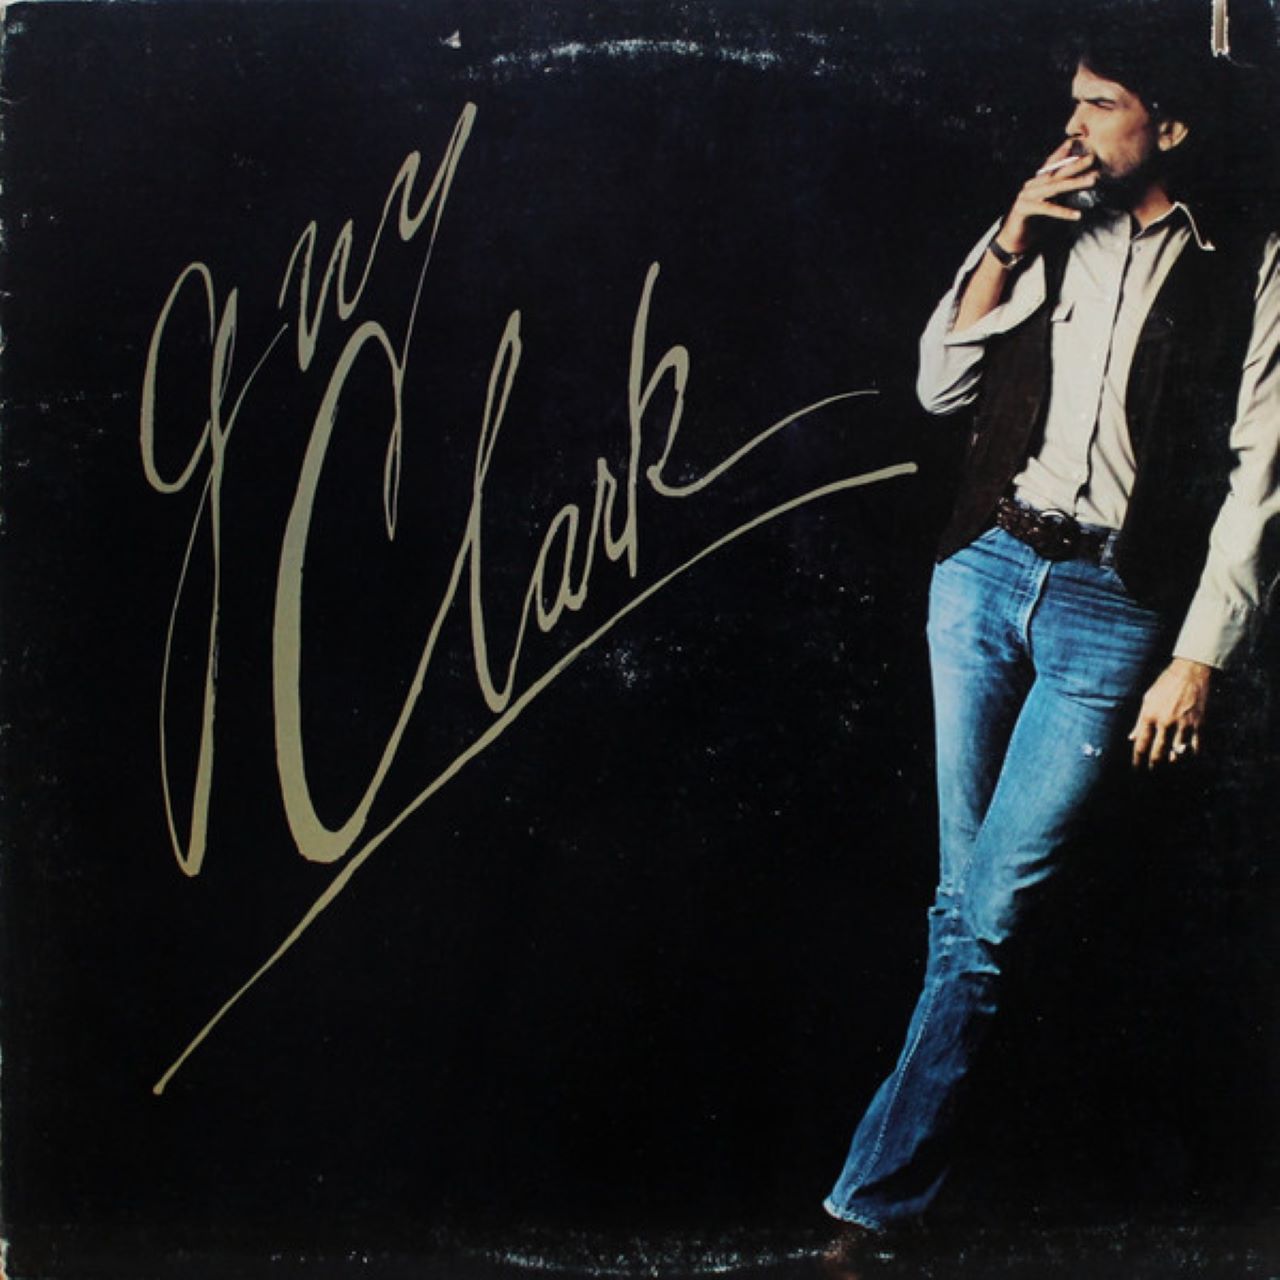 Guy Clark - Guy Clark cover album